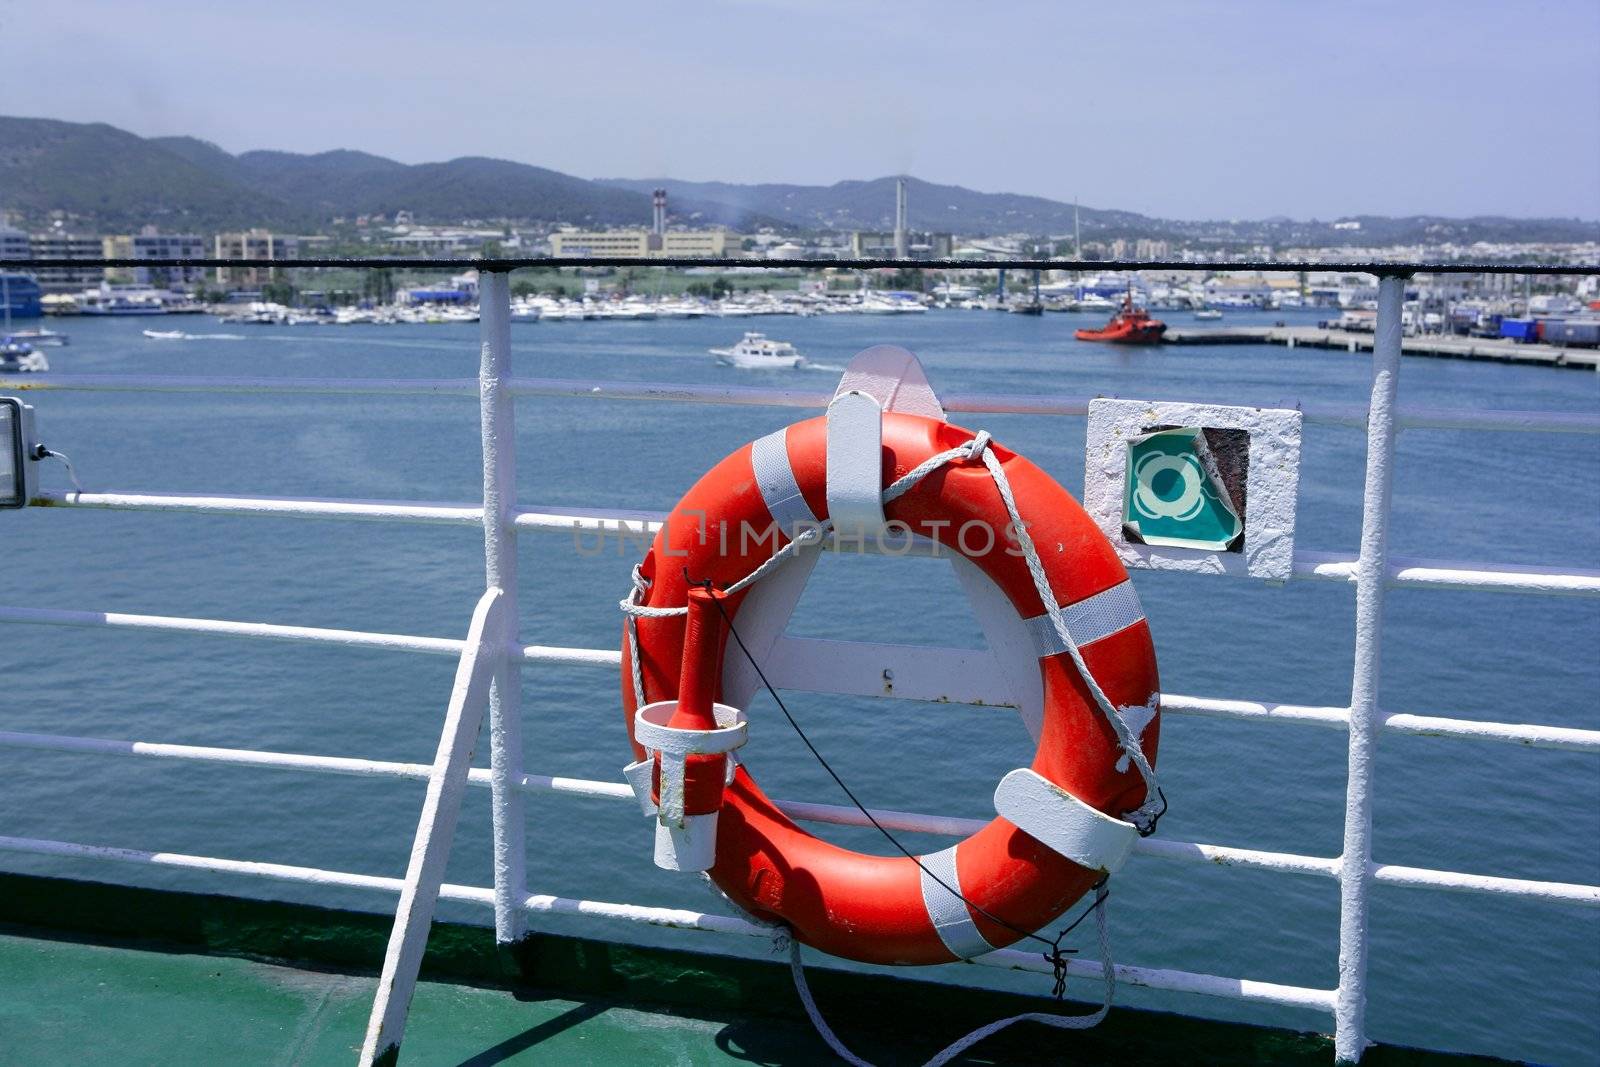 Cruise white boat handrail in blue Ibiza sea and round orange buoy